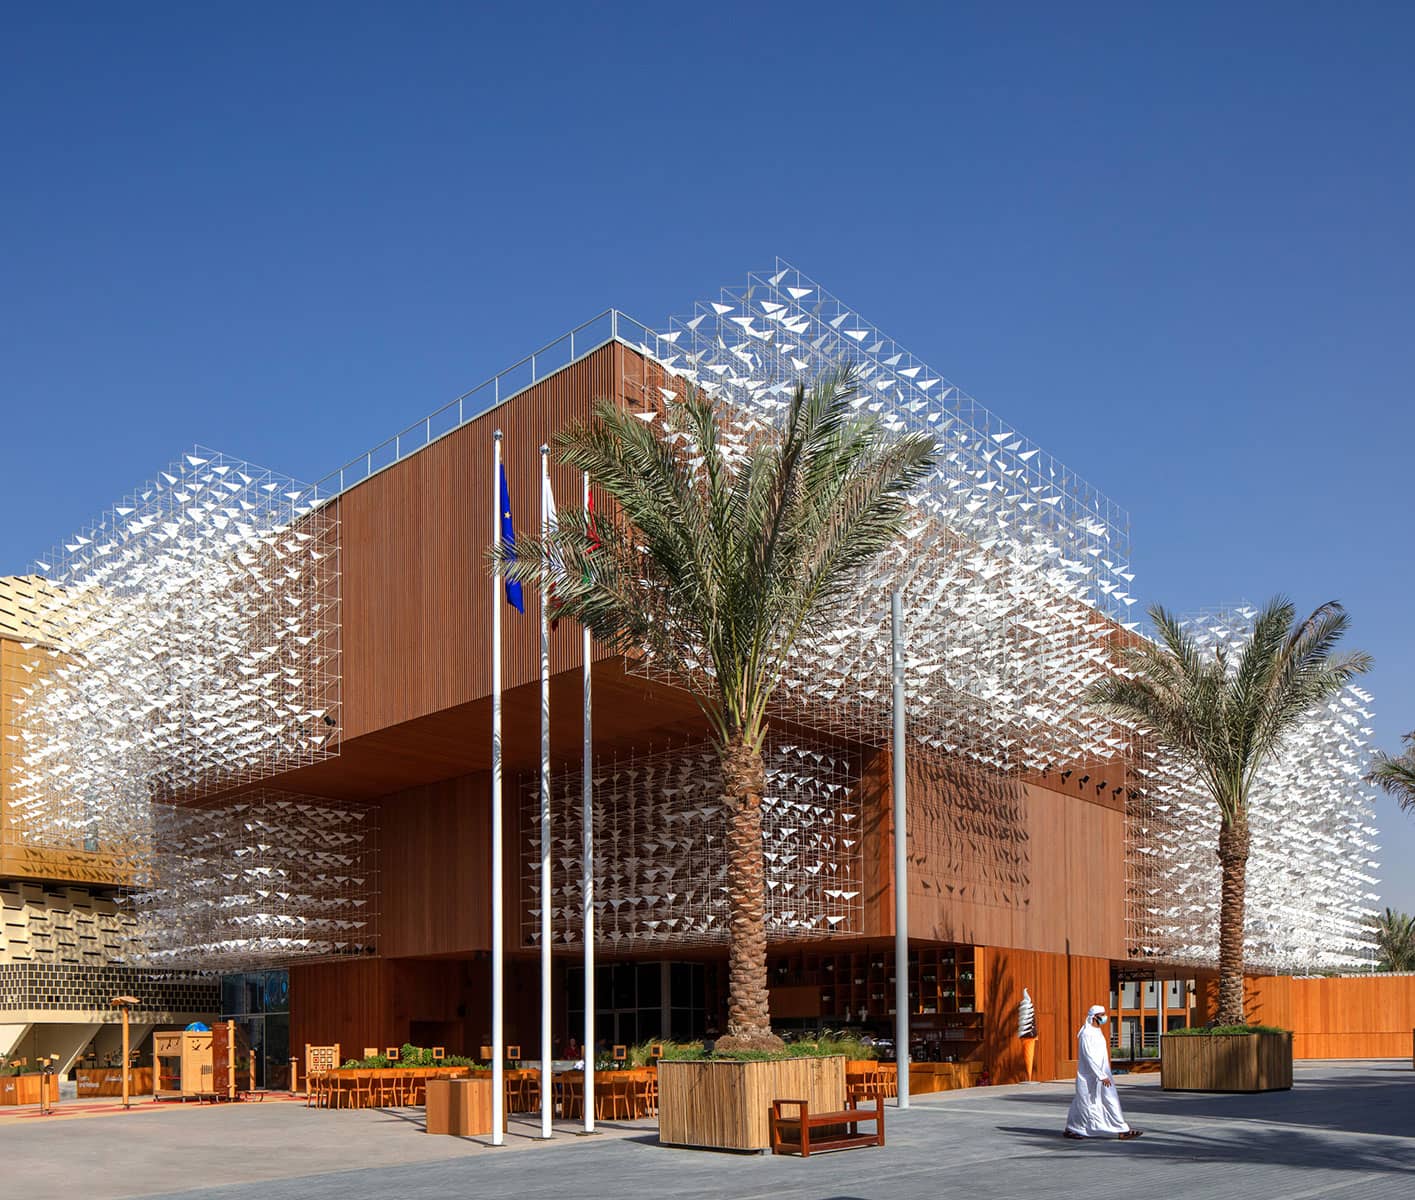 Architecture Photography Dubai : Expo2020 Dubai: Poland Pavilion: Designed by WXCA